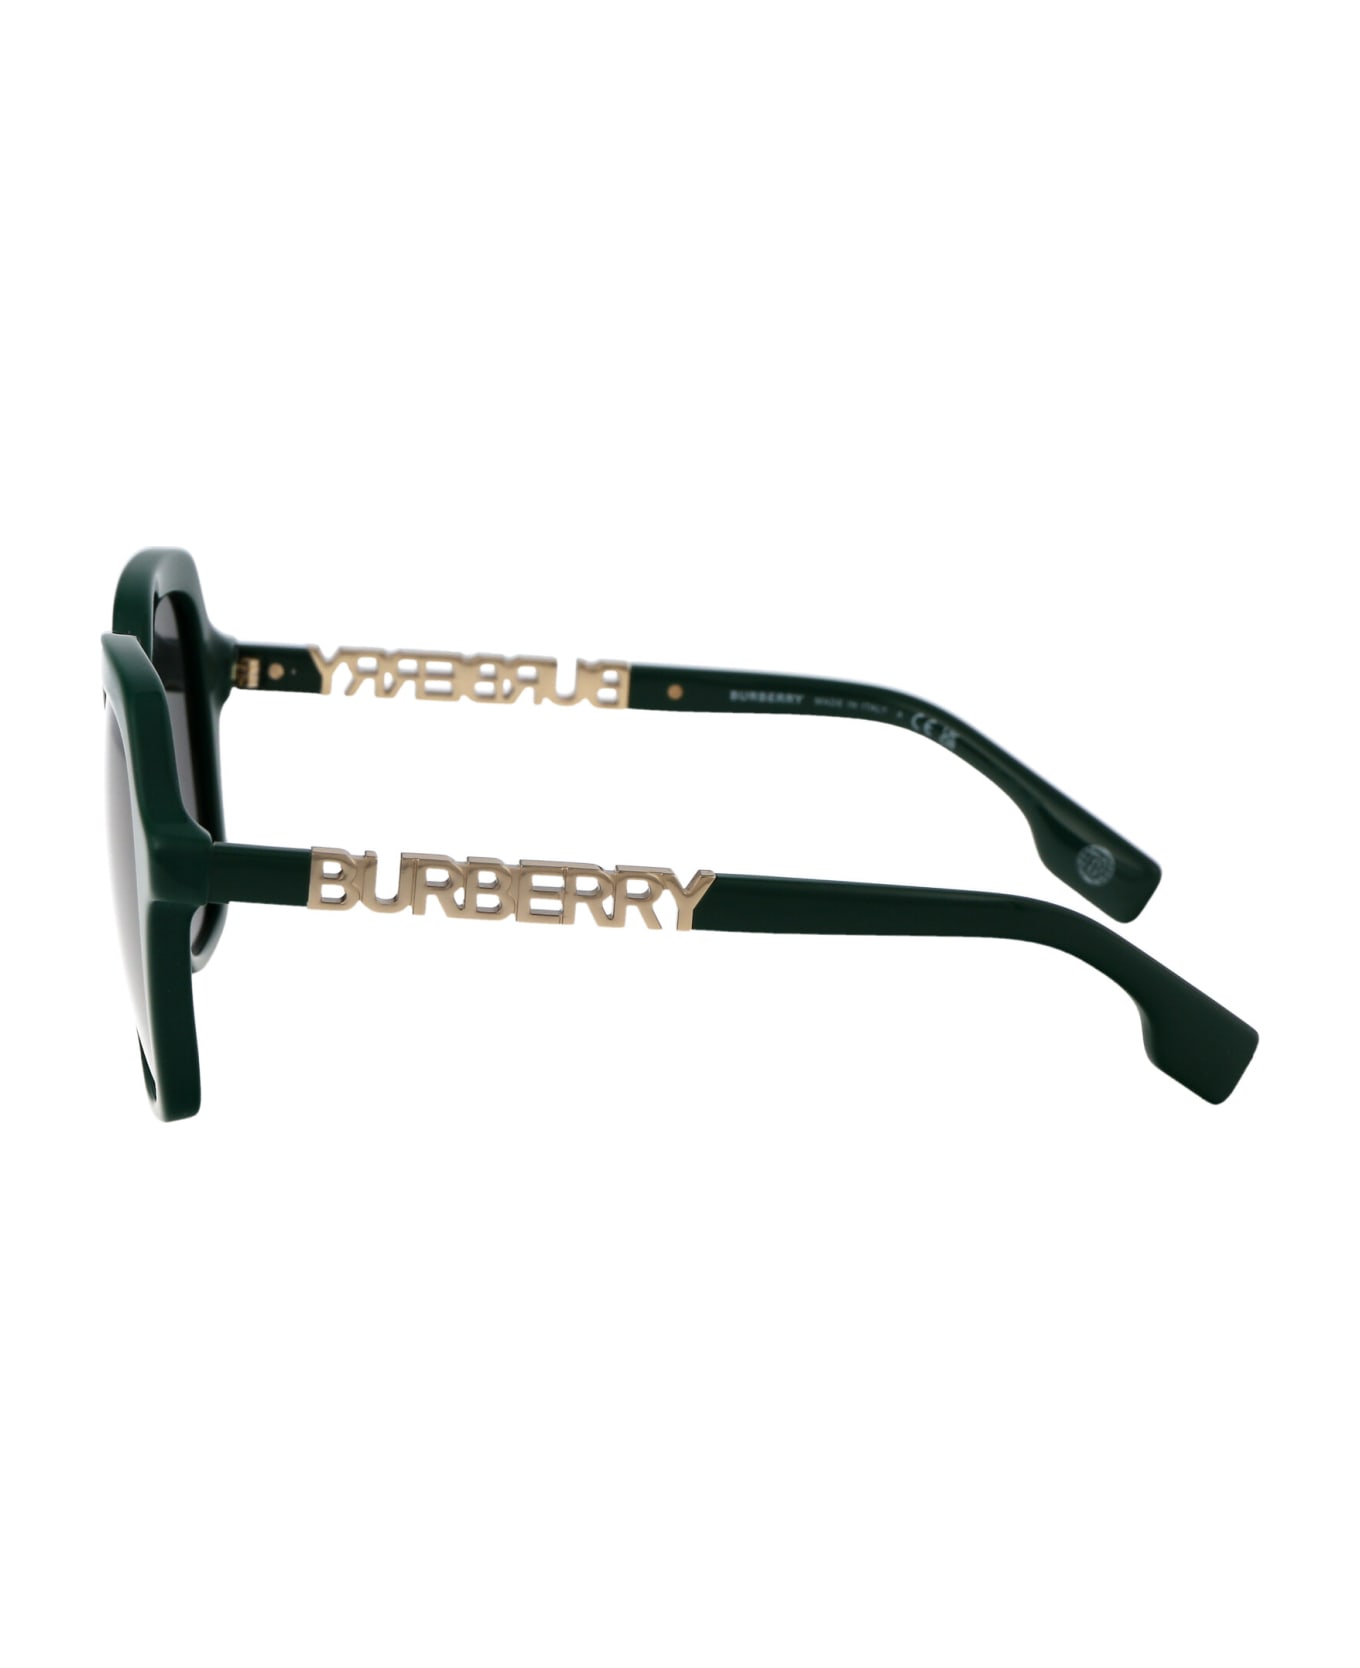 Burberry Eyewear Joni Sunglasses - 405987 Green